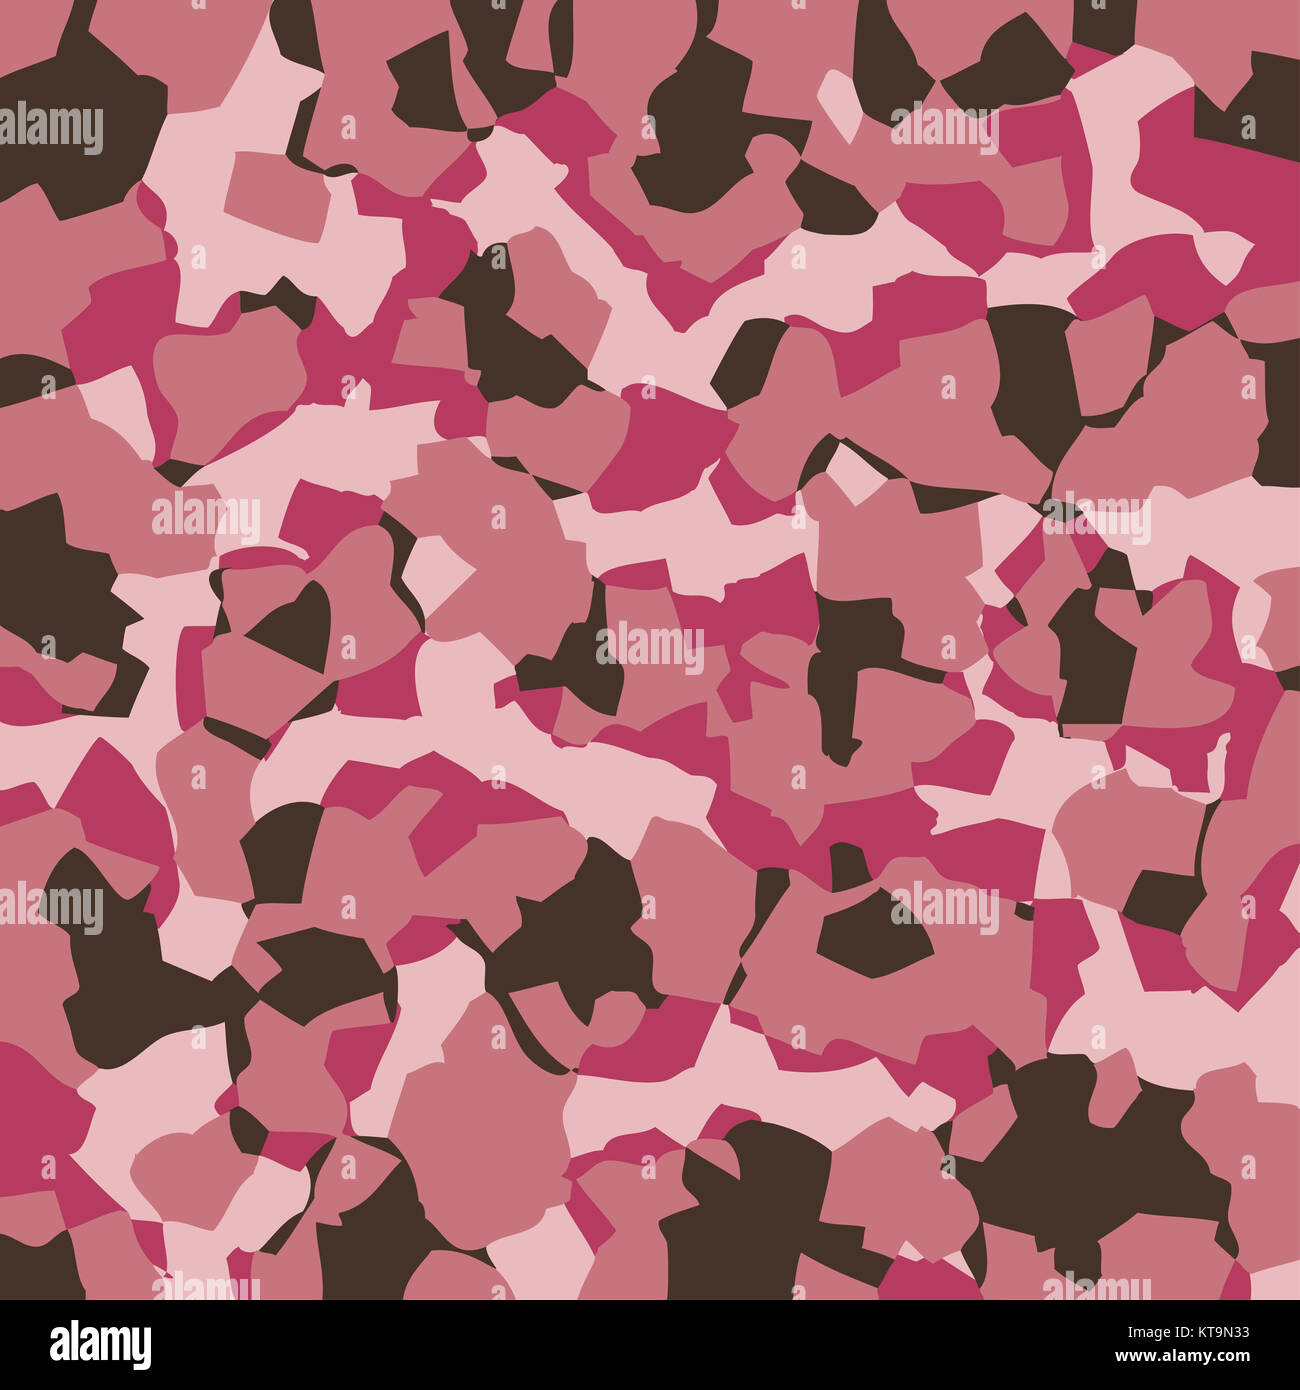 Camouflage pattern background seamless Stock Photo